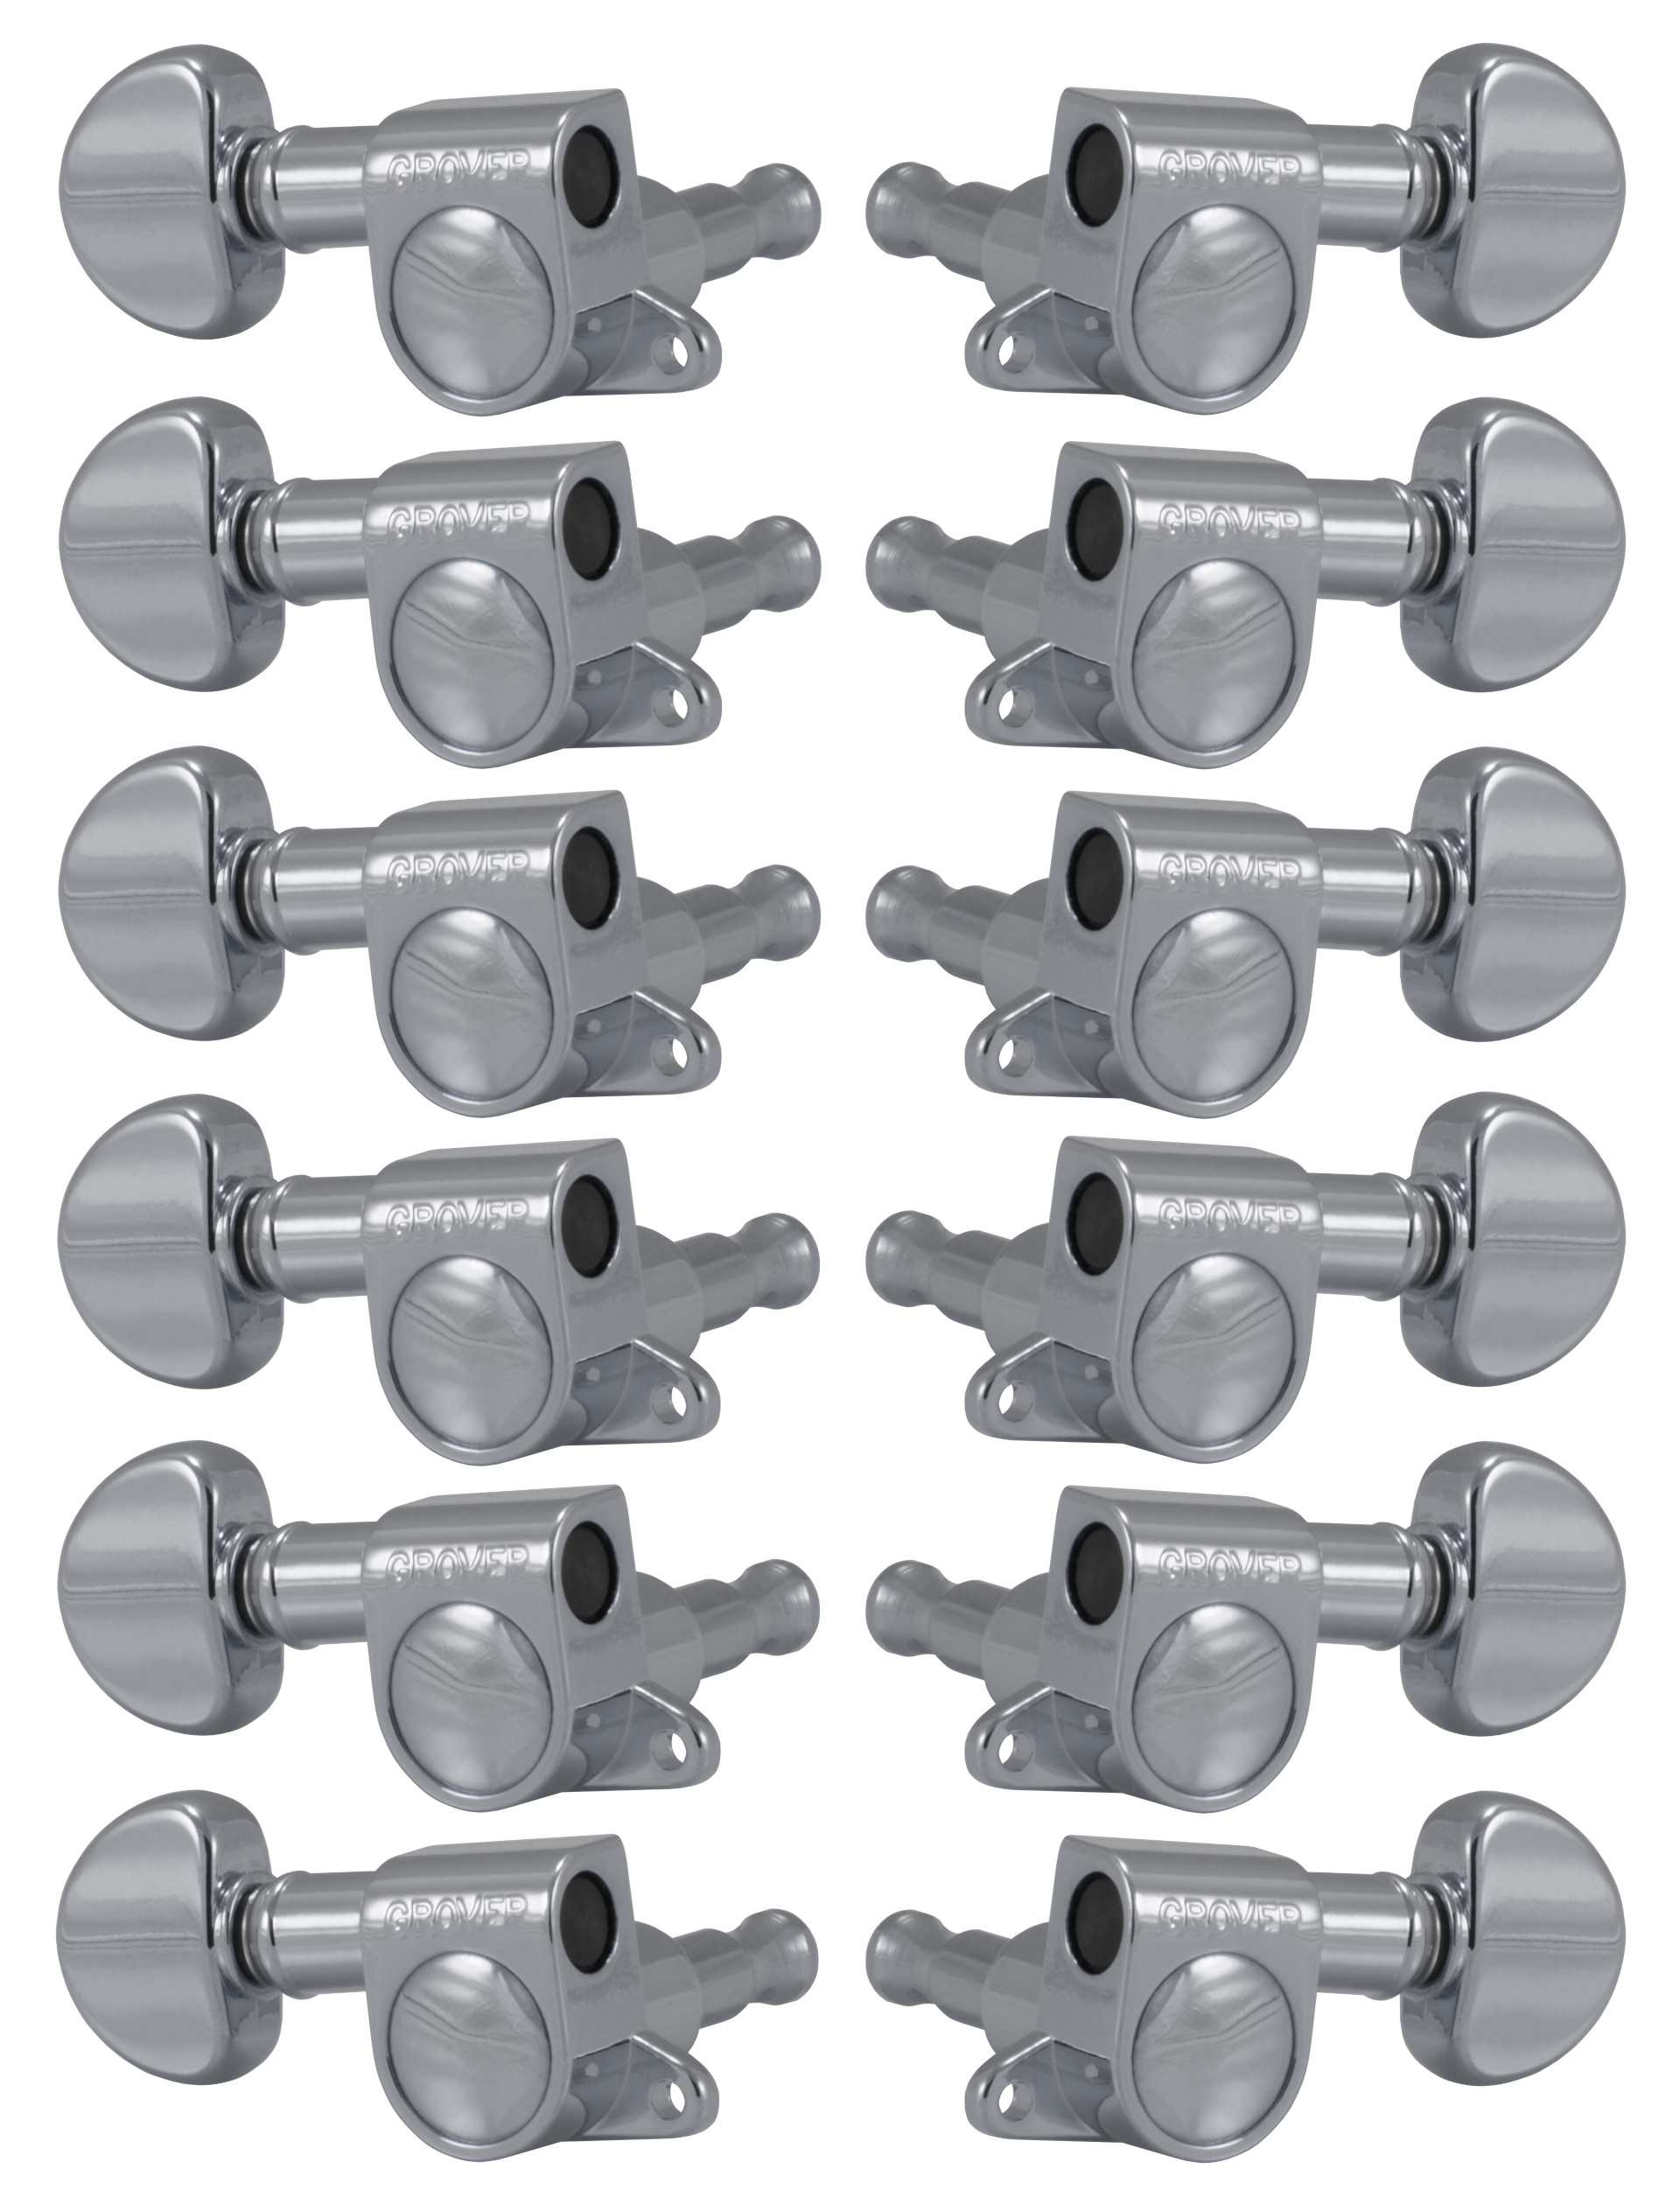 Grover 205C12 Mini Rotomatics with Round Button - 12-String Guitar Machine Heads, 6 + 6 - Chrome